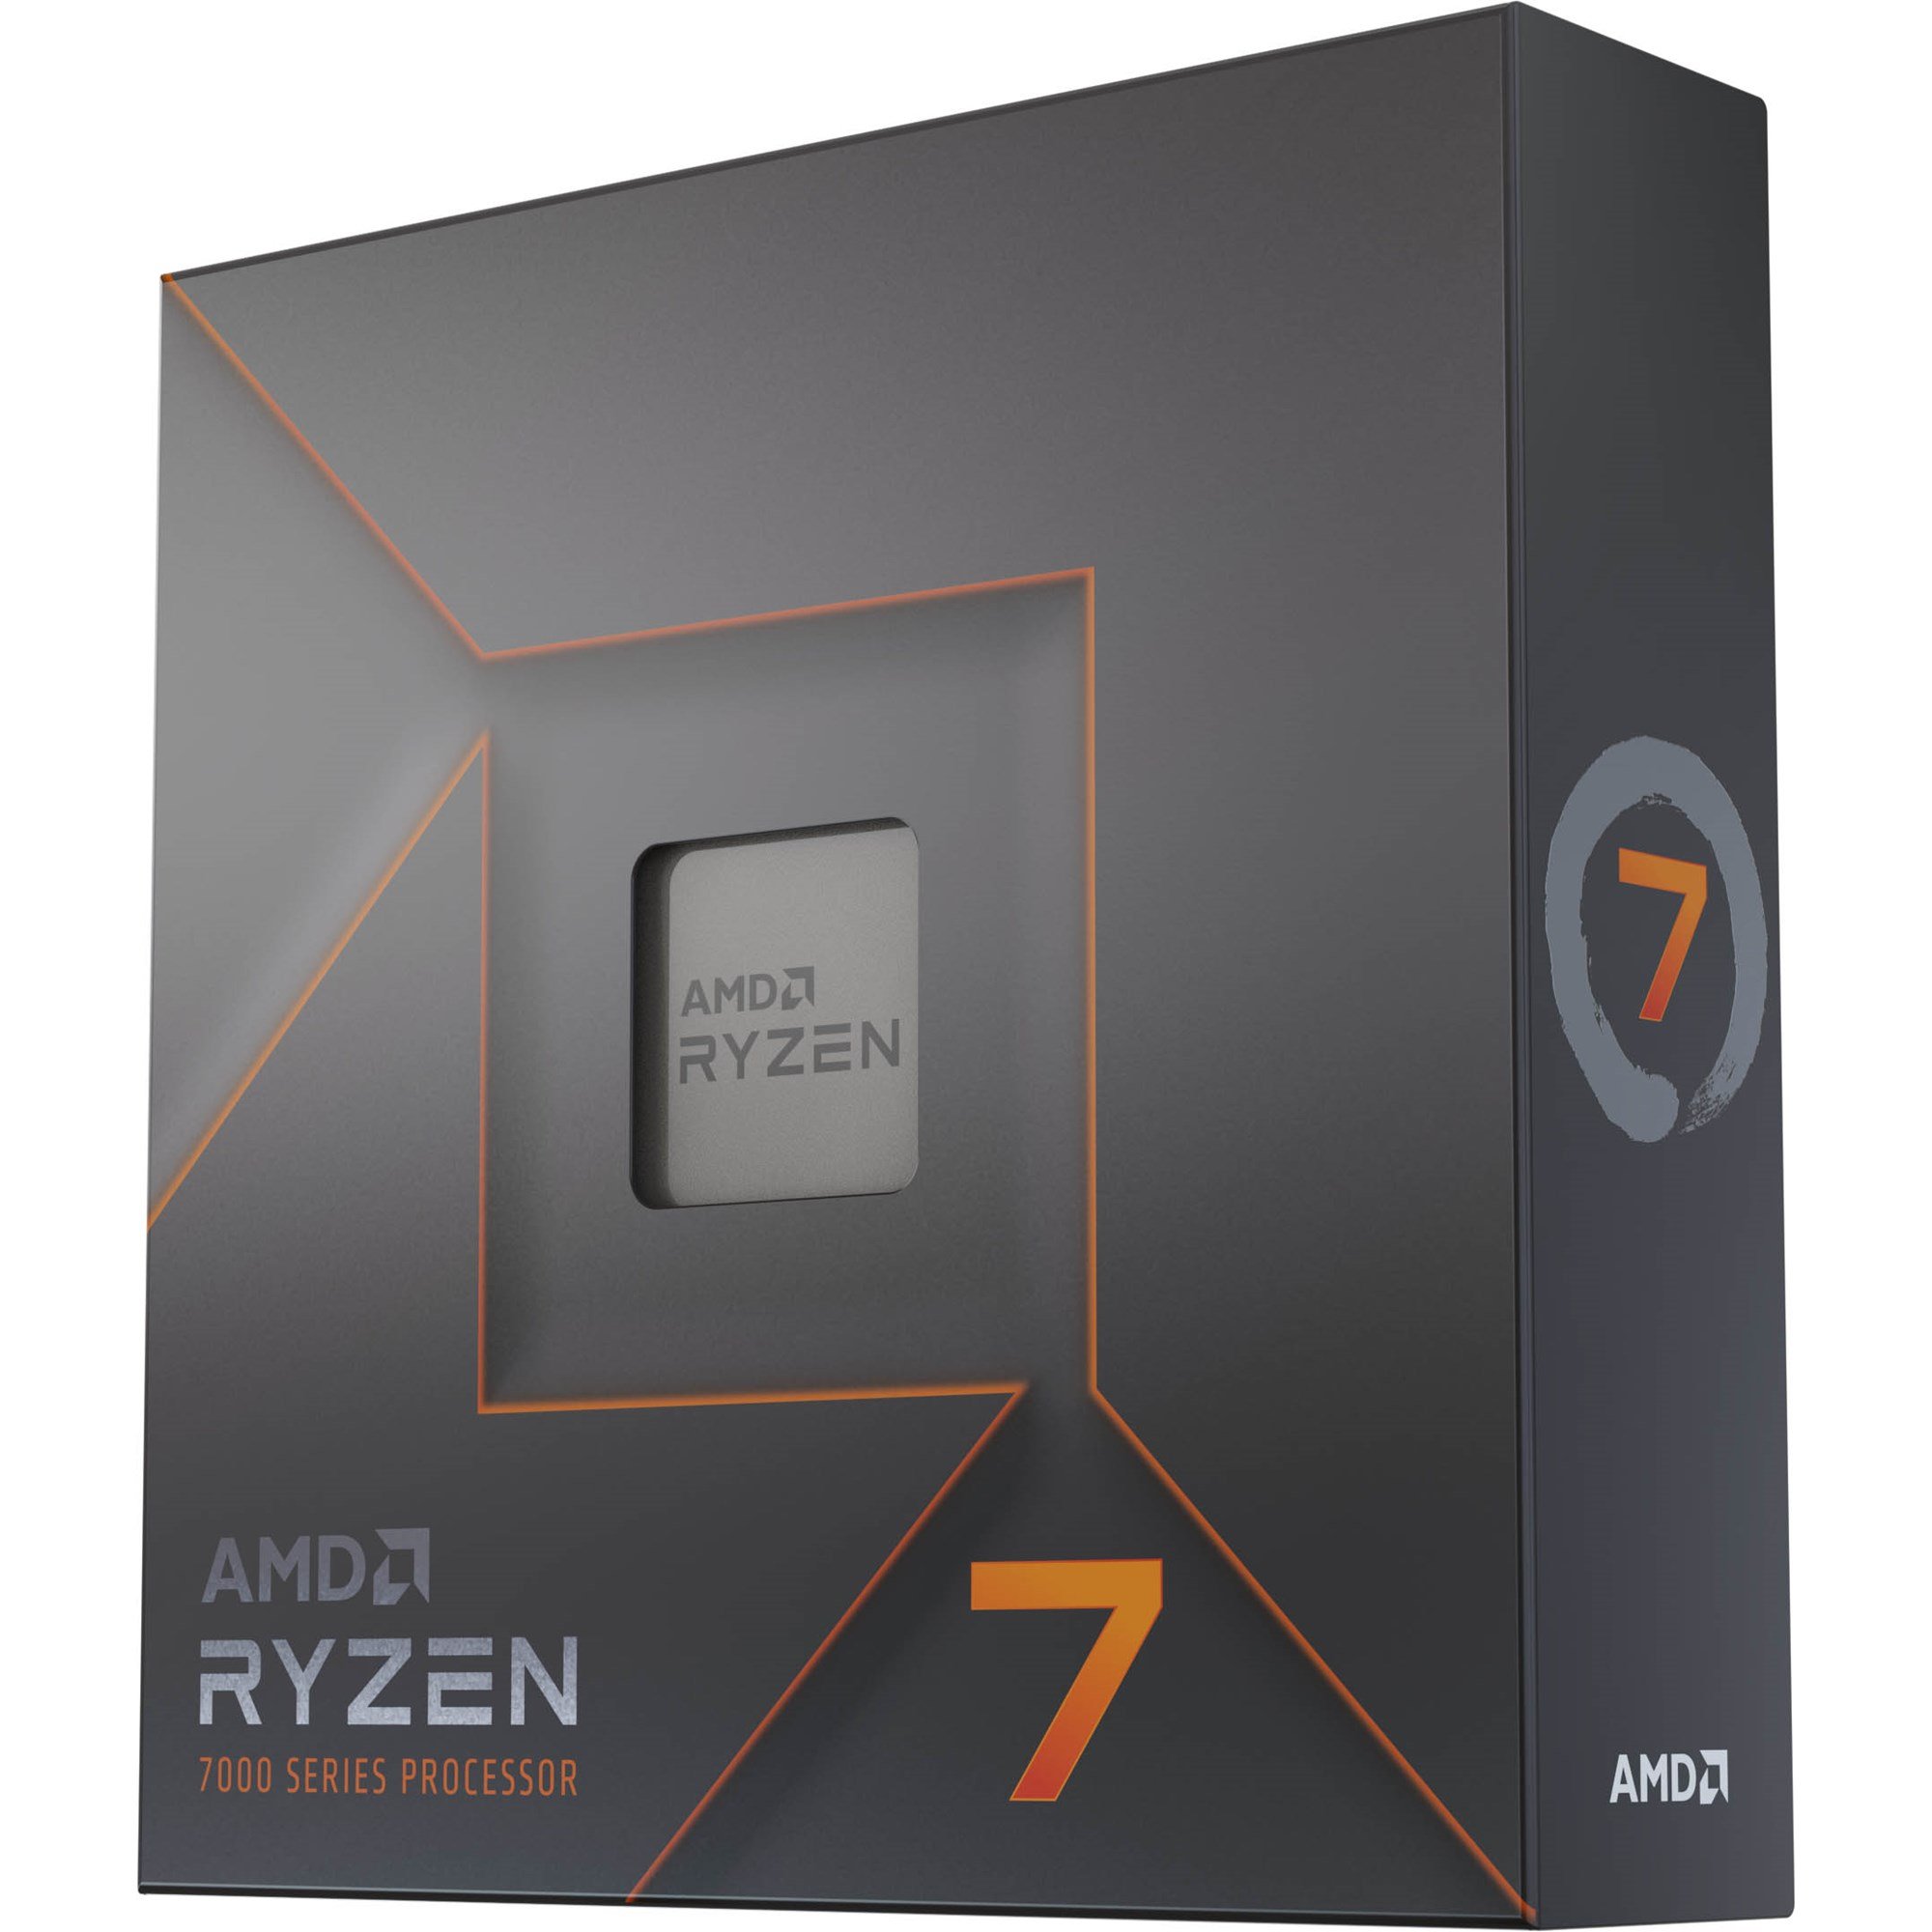 AMD Ryzen 9 Box